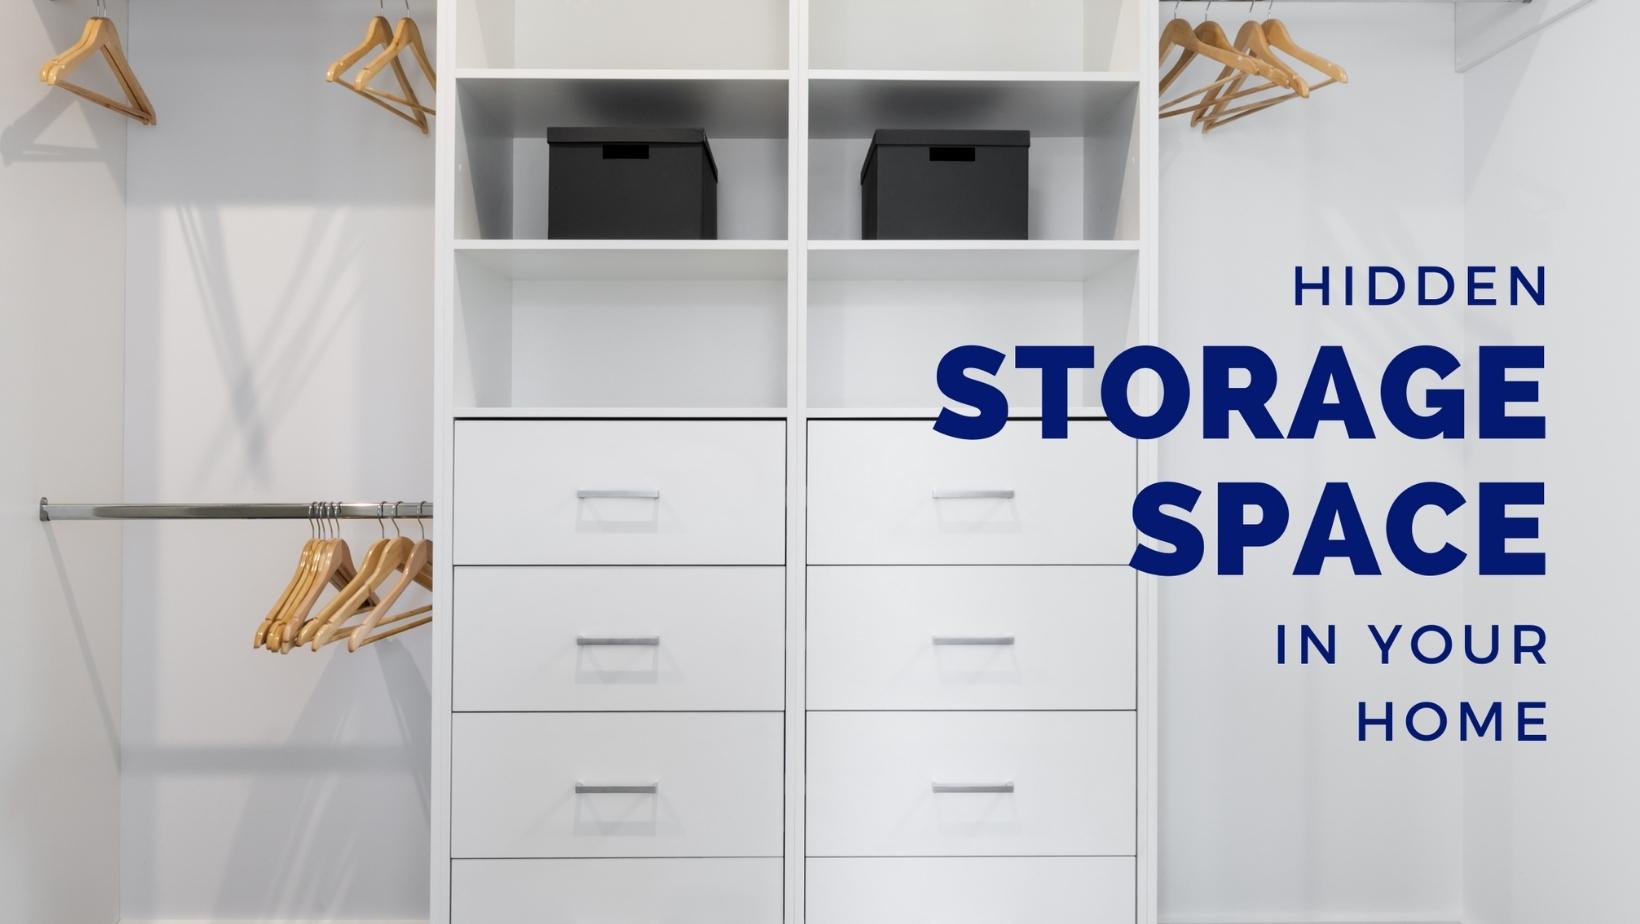 Dresser closet with hangers, Hidden storage spaces in your home